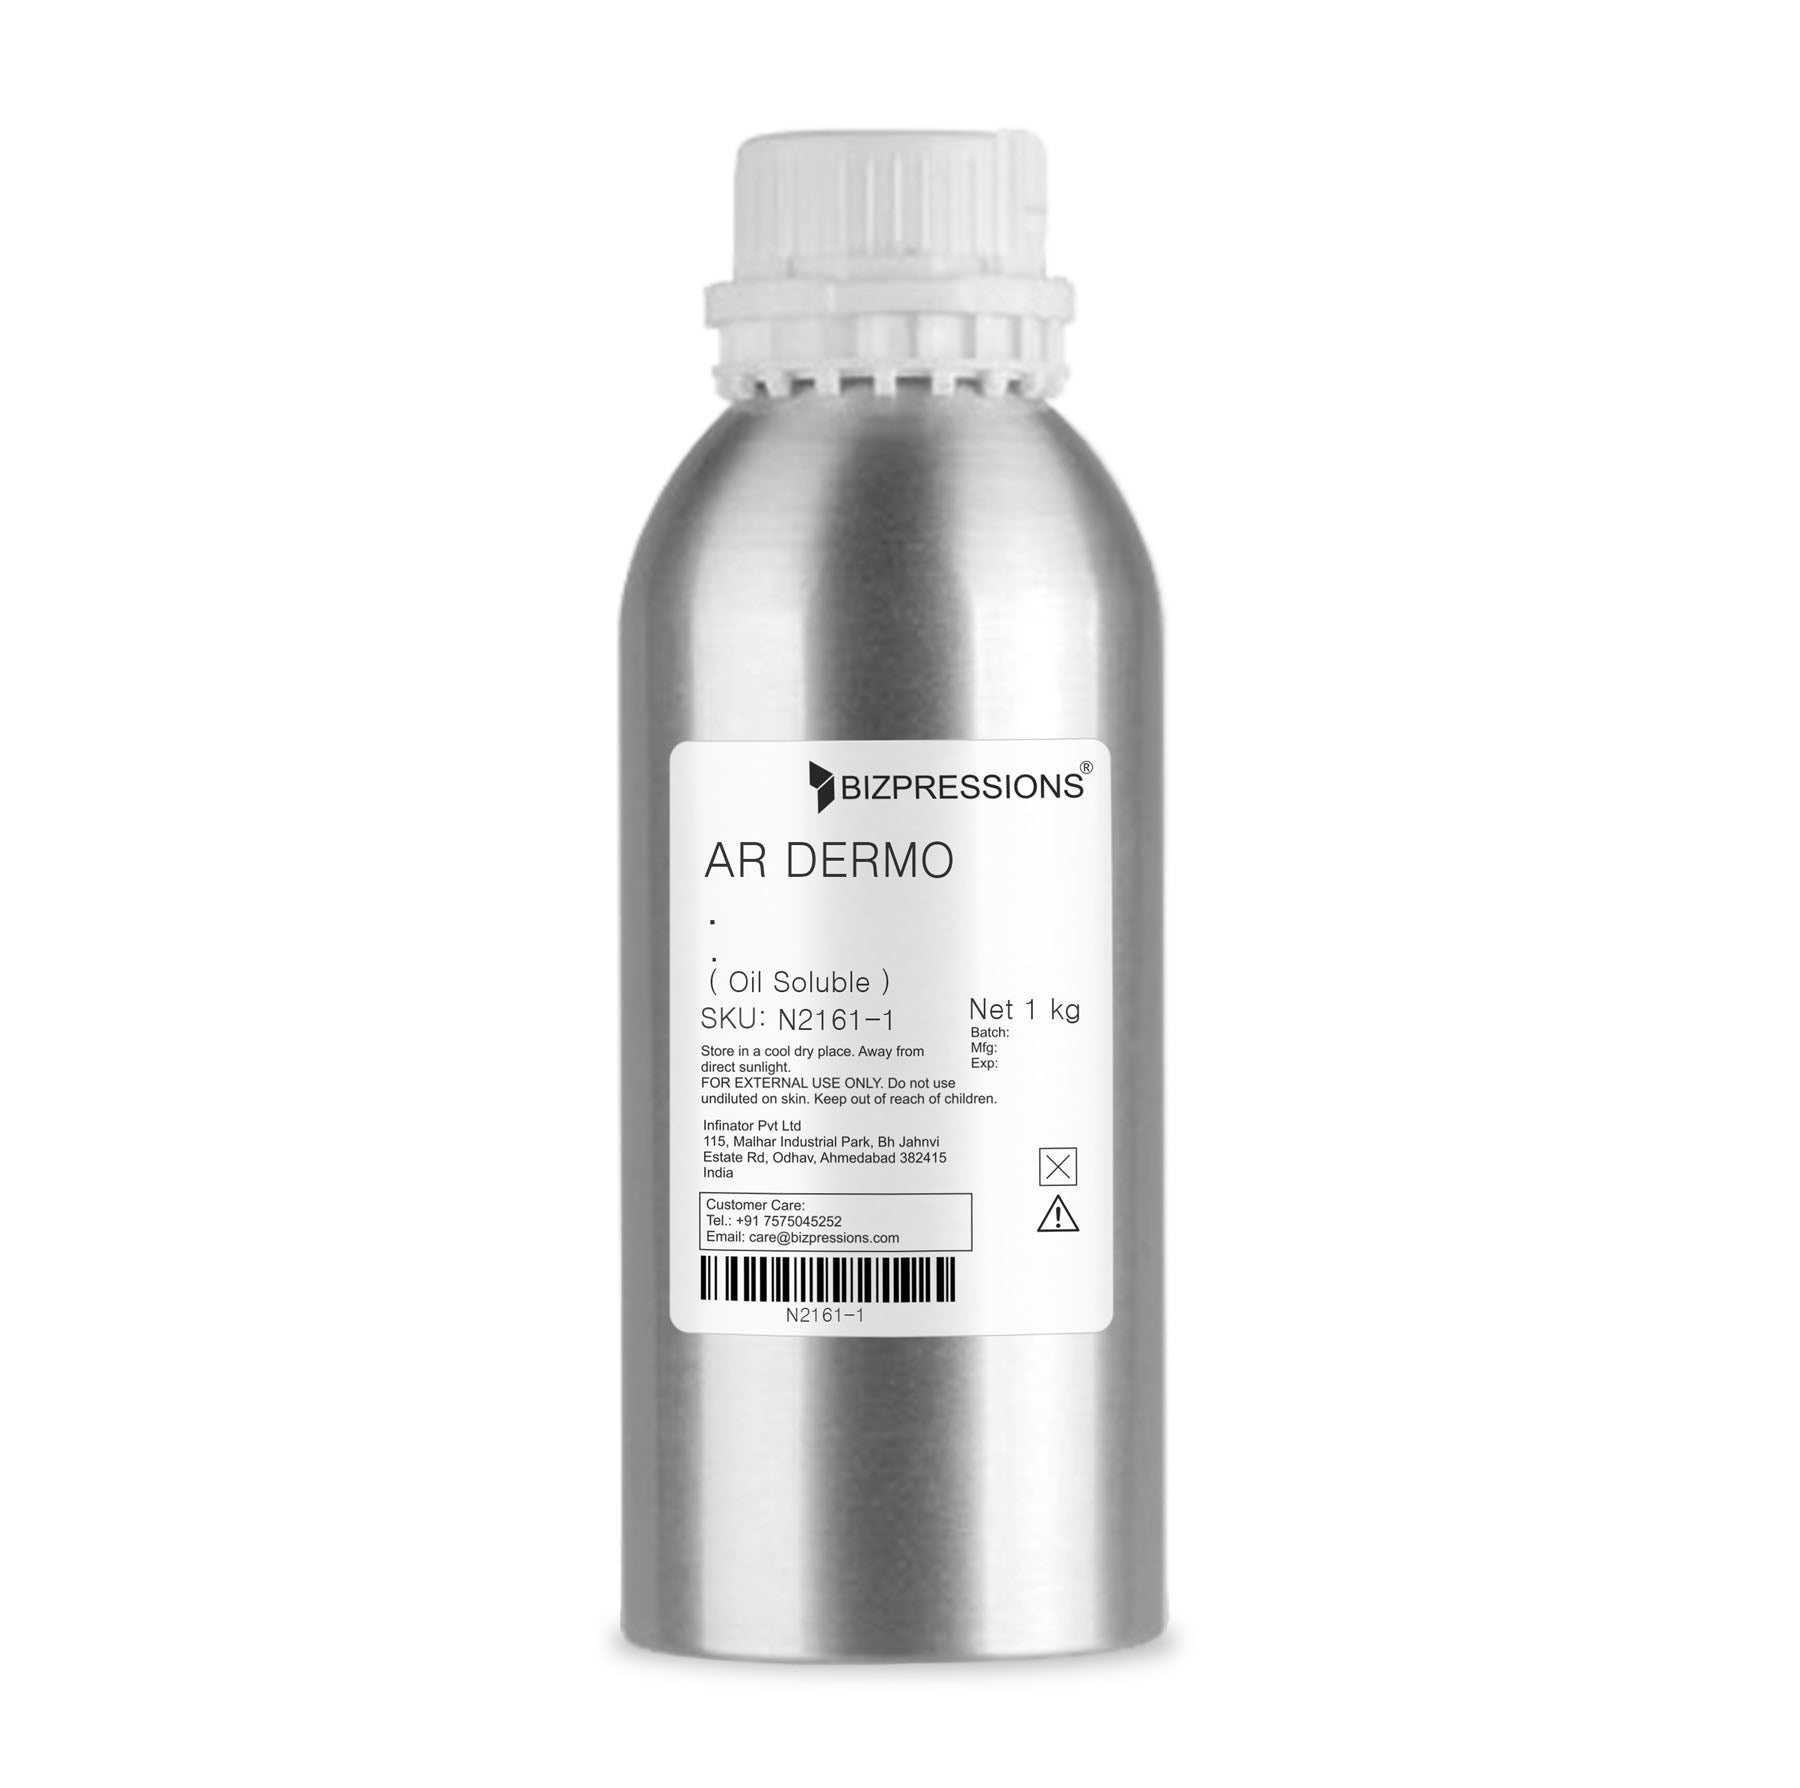 AR DERMO - Fragrance ( Oil Soluble ) - 1 kg